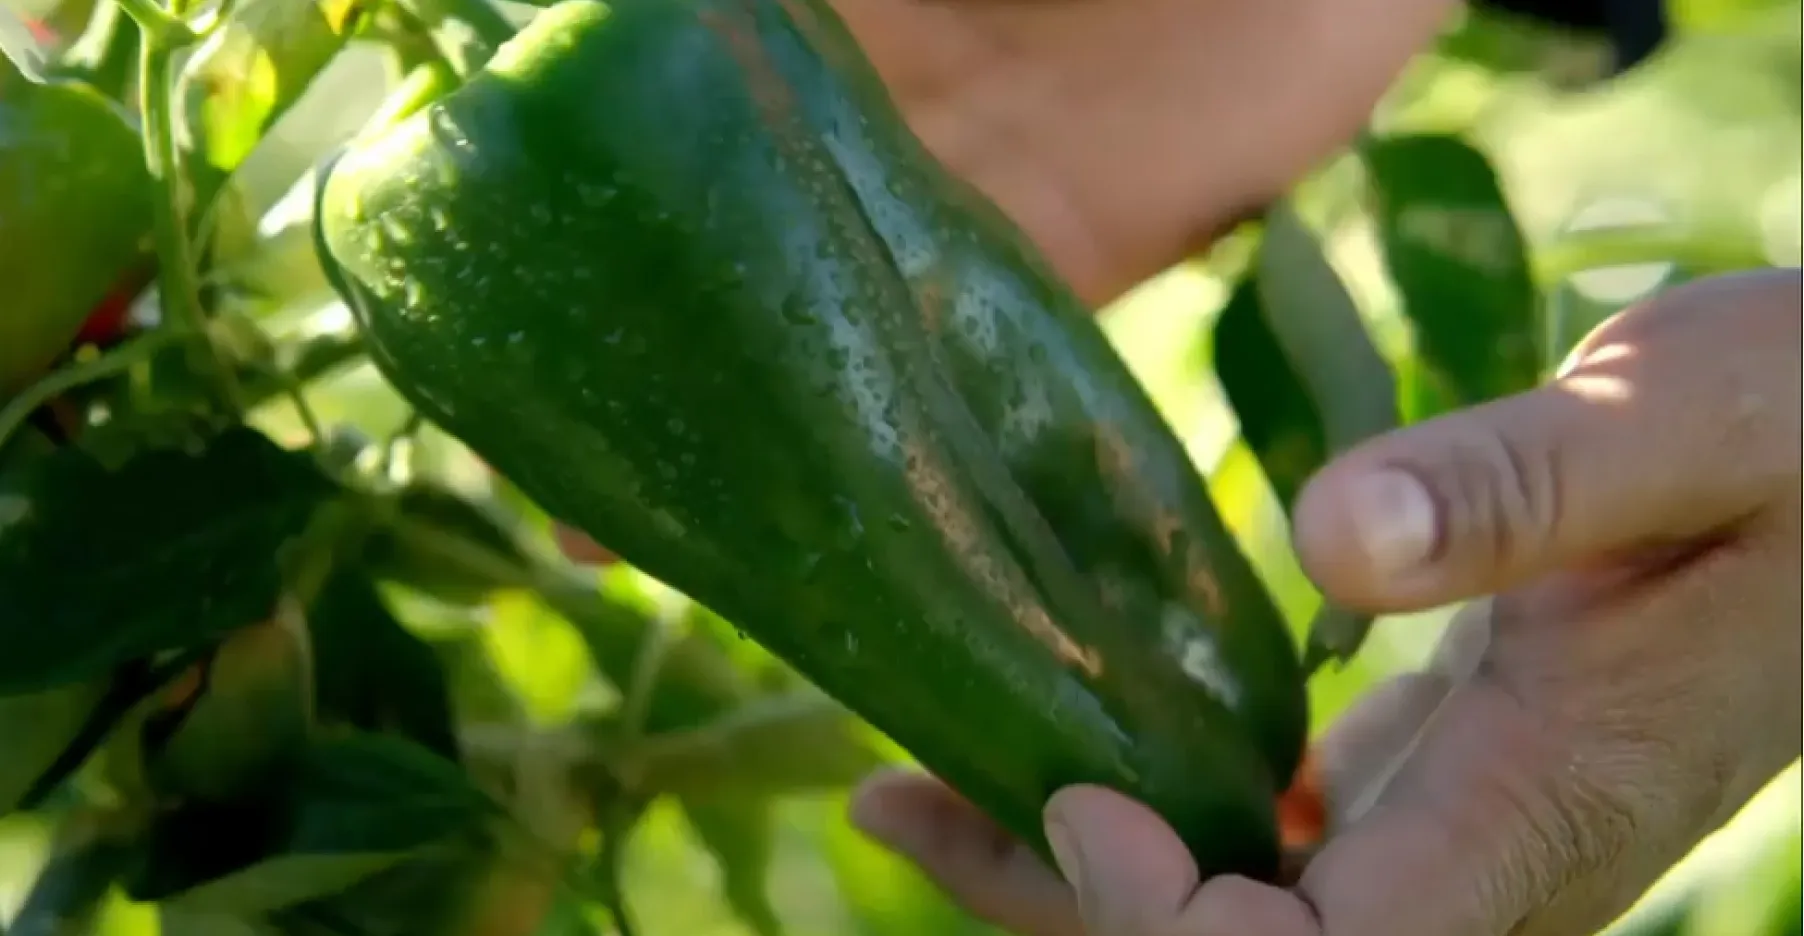 Hands holding a pepper up close